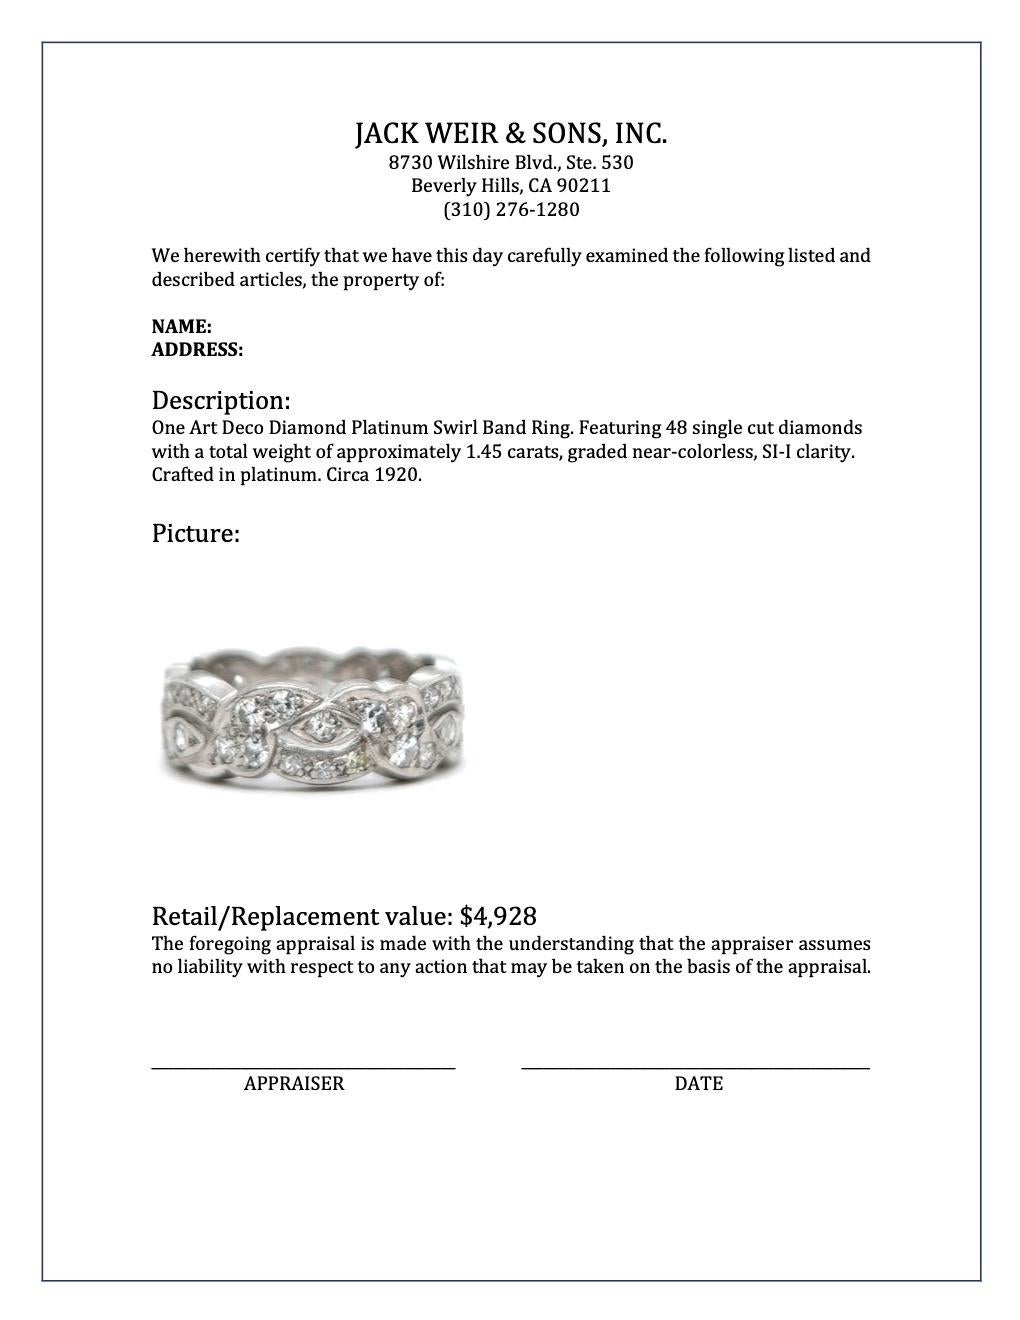 Women's or Men's Art Deco Diamond Platinum Swirl Band Ring